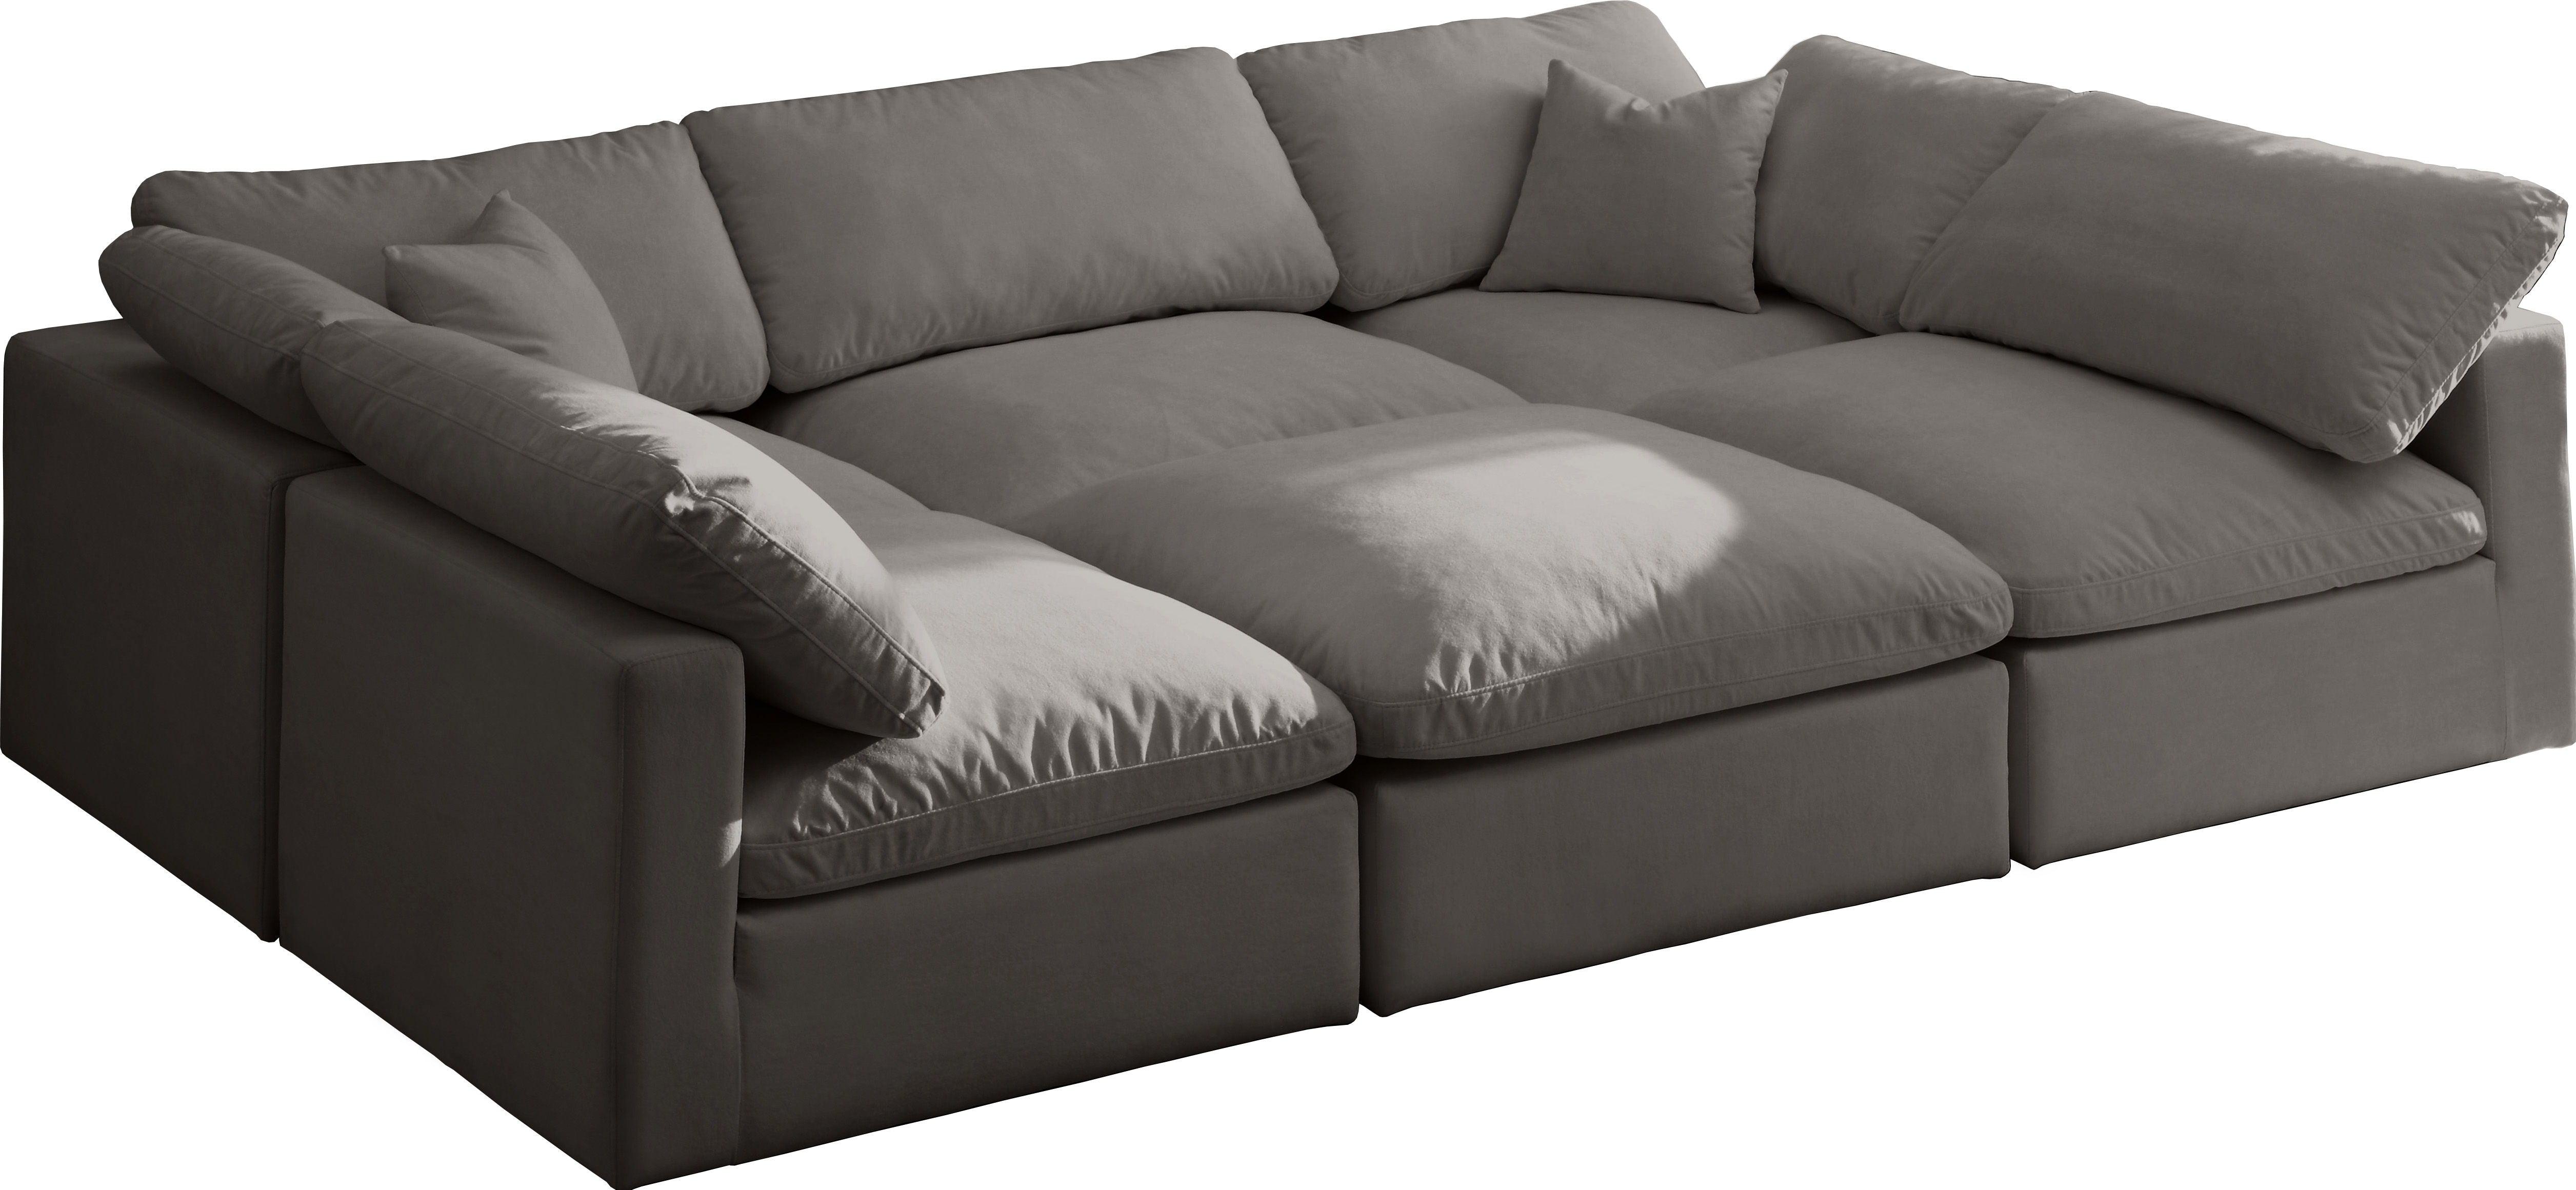 Meridian Furniture - Plush - Velvet Standart Comfort Modular Sectional 6 Piece - Grey - Modern & Contemporary - 5th Avenue Furniture